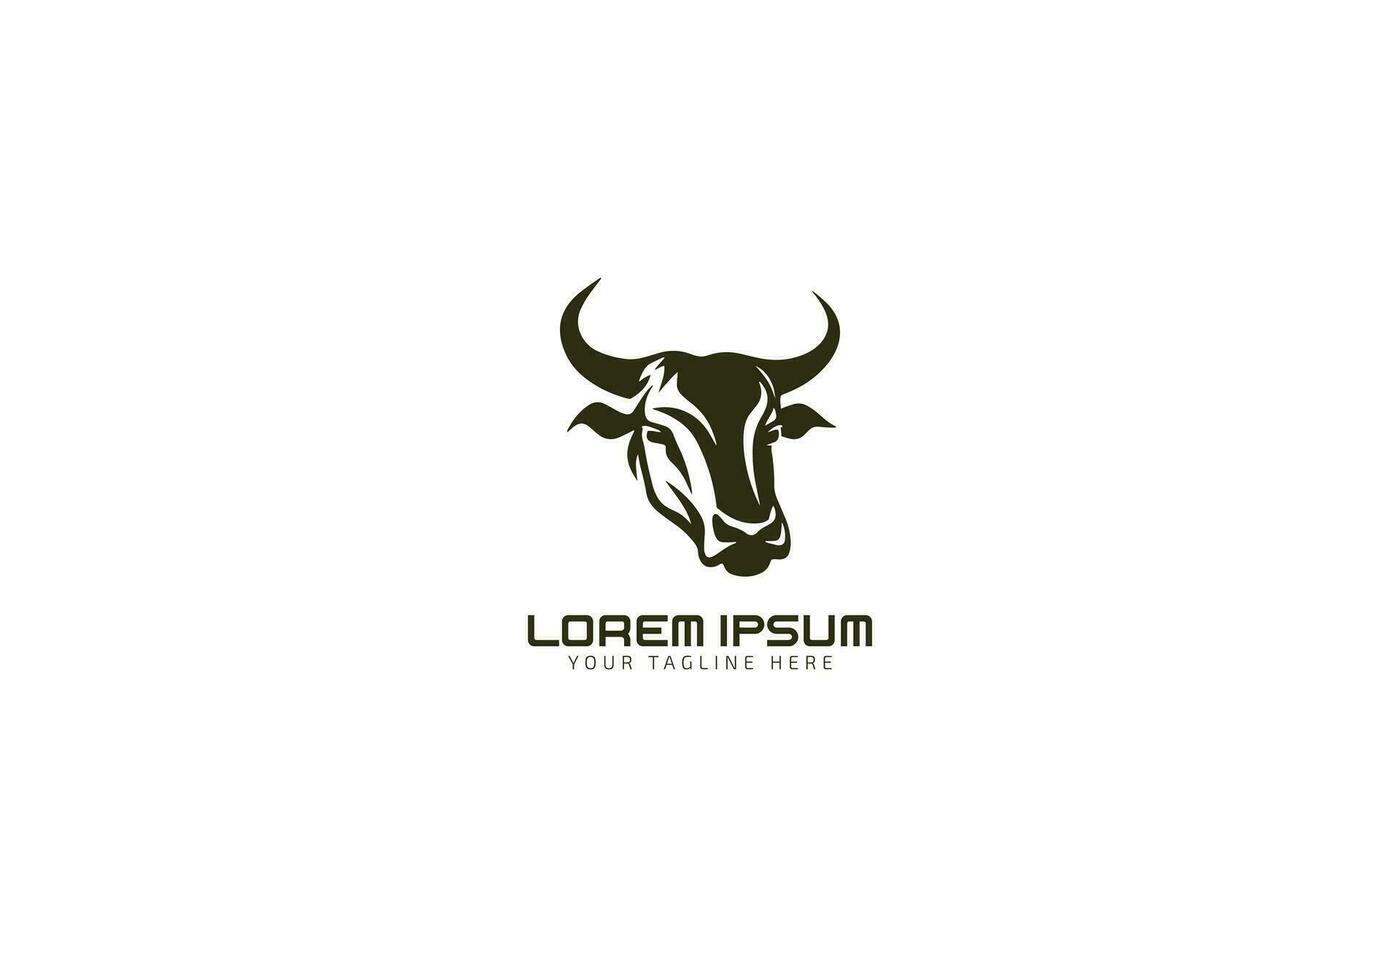 Bull face logo of cow head silhouette clip art vector. animal icon bulls symbol vector